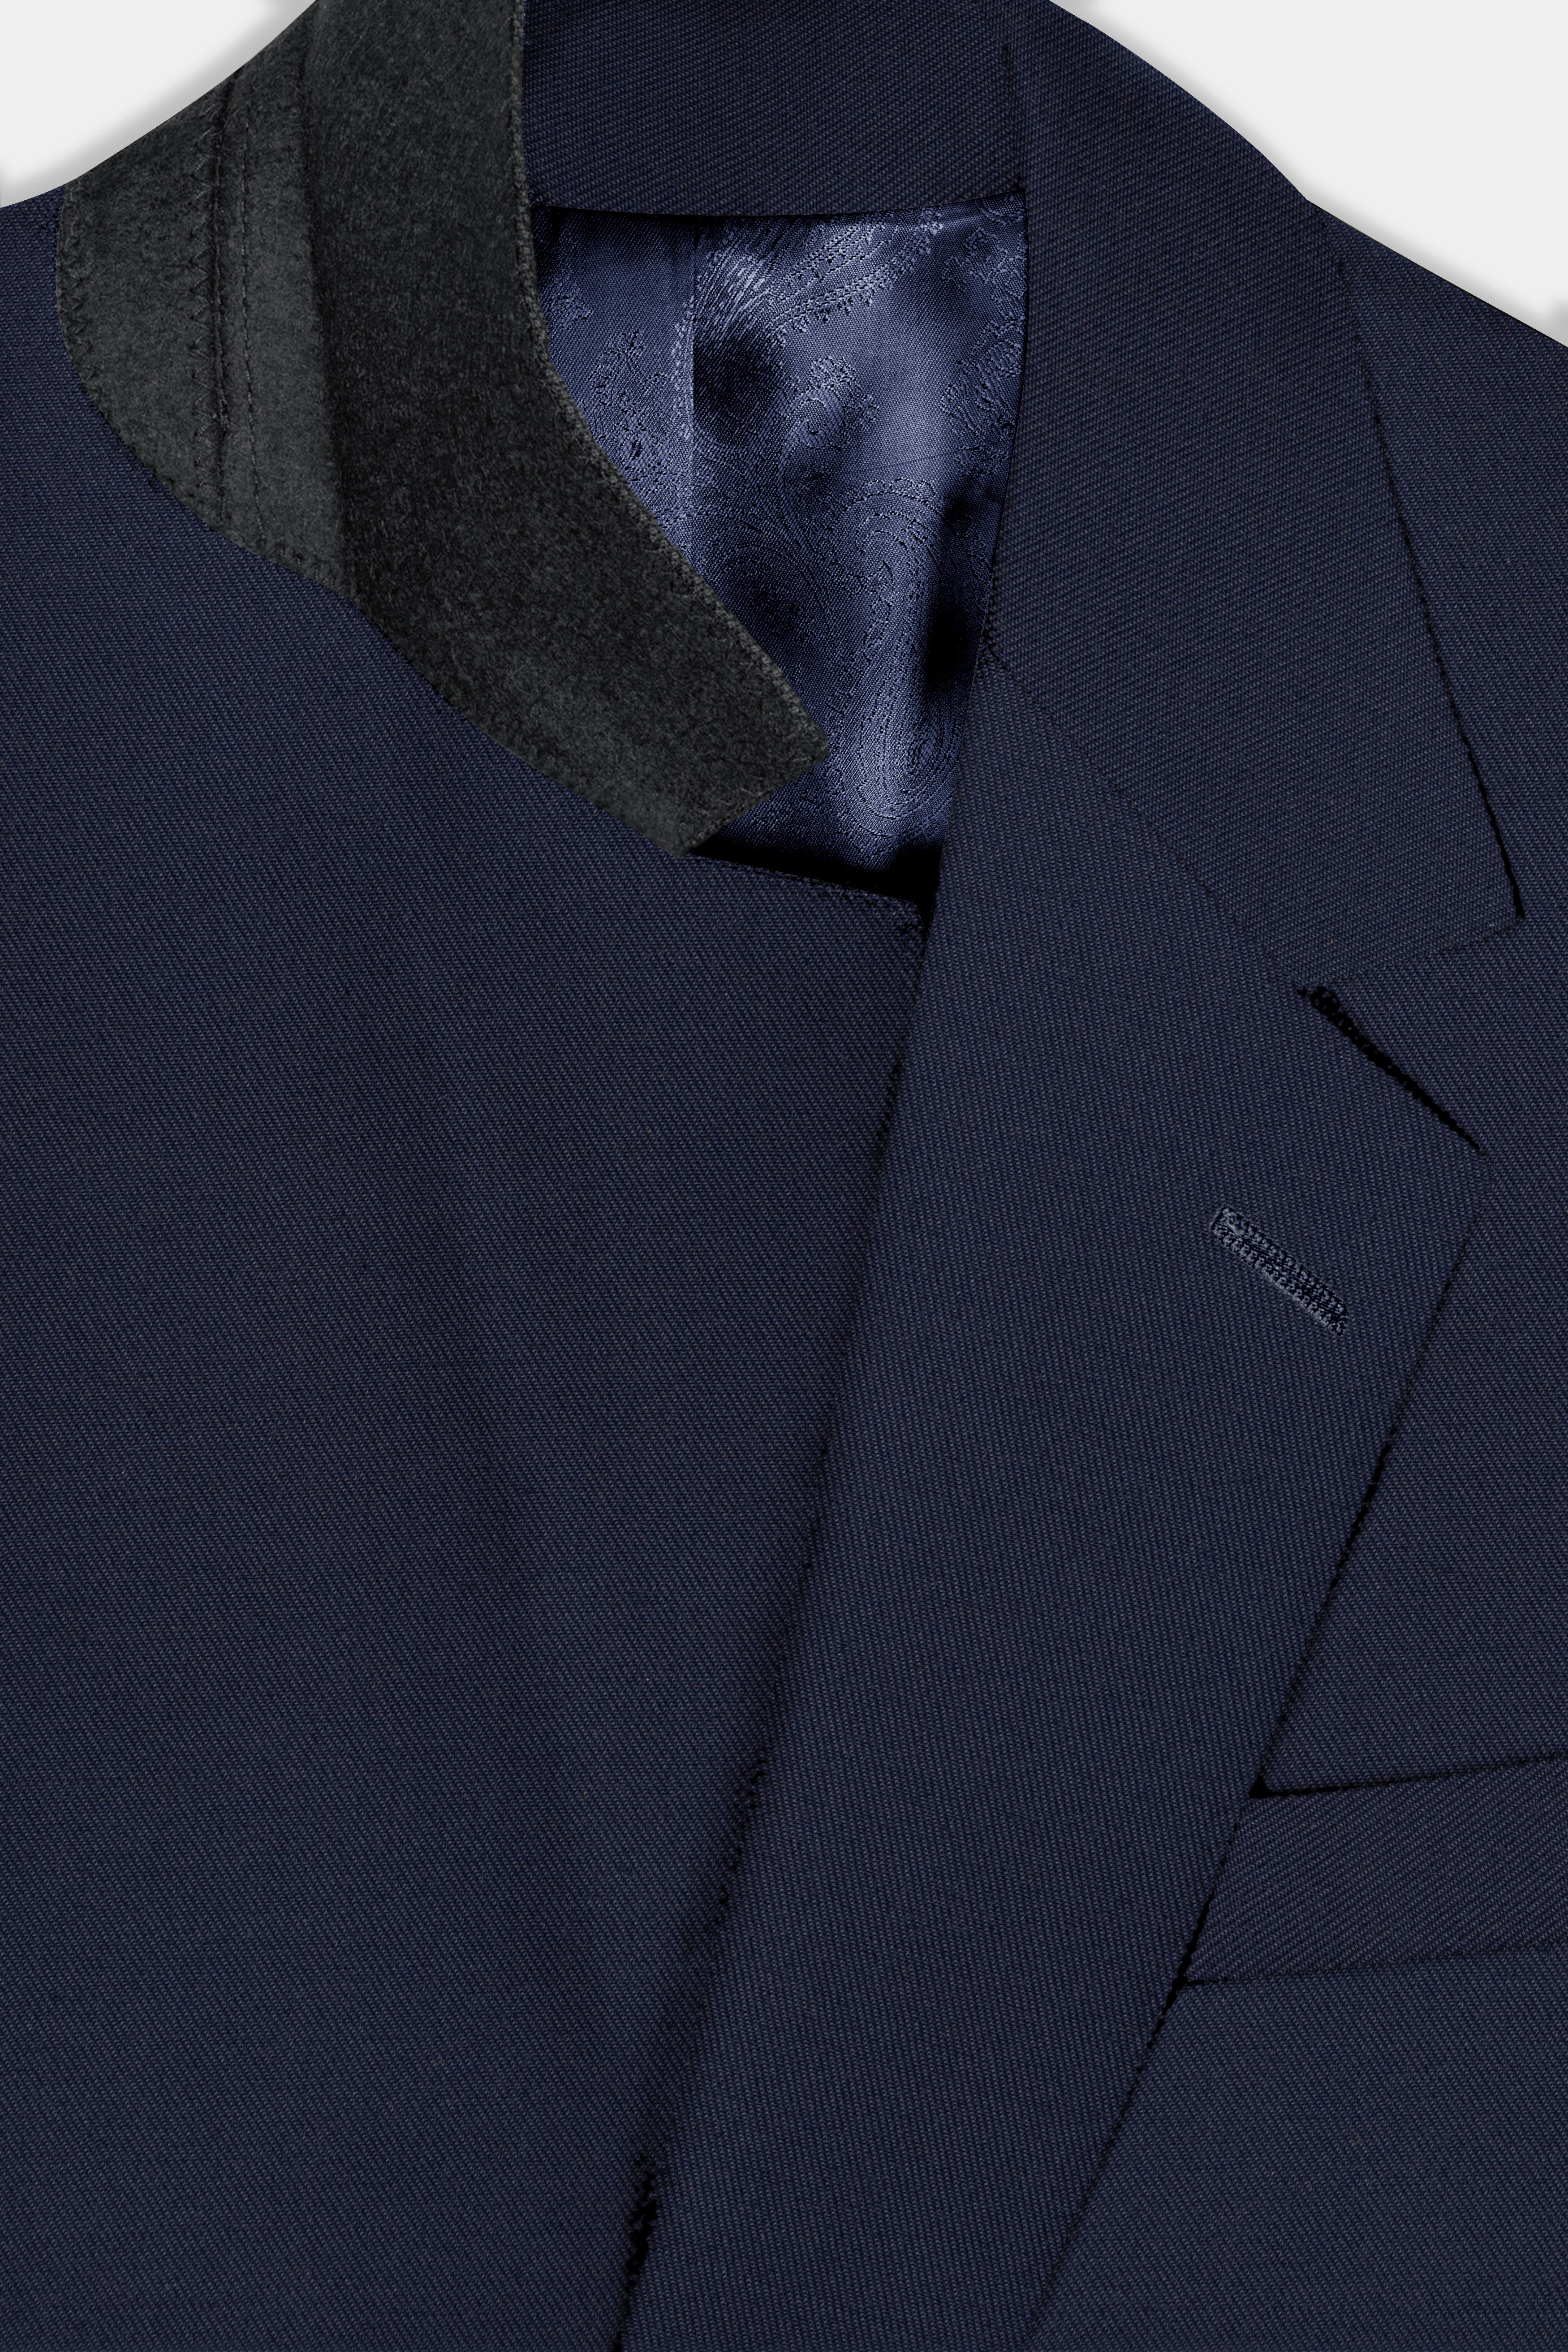 Vulcan Blue Plain Solid Wool Blend Suit